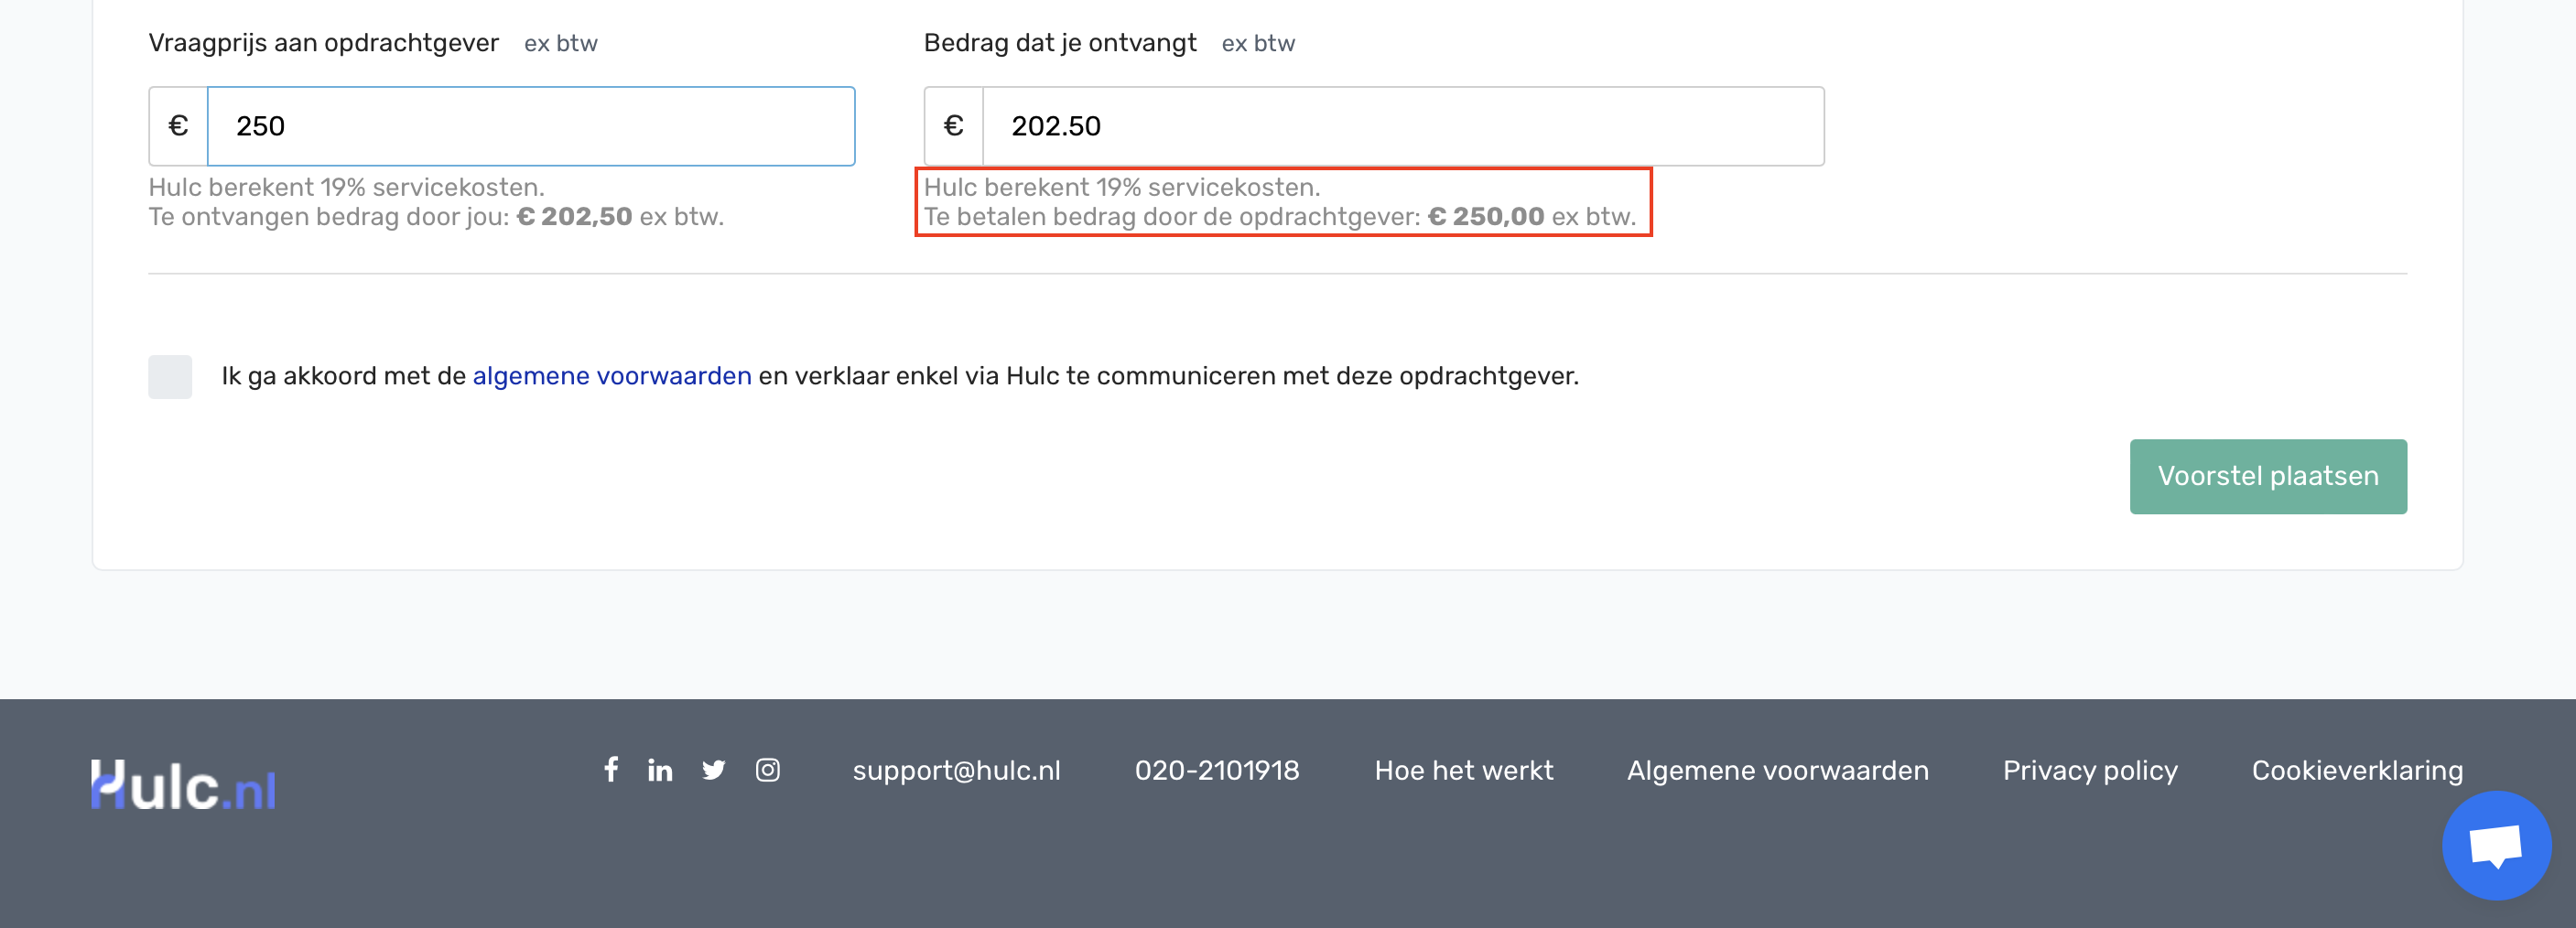 Hulc.nl vraagt 19% commissie op een advertorial